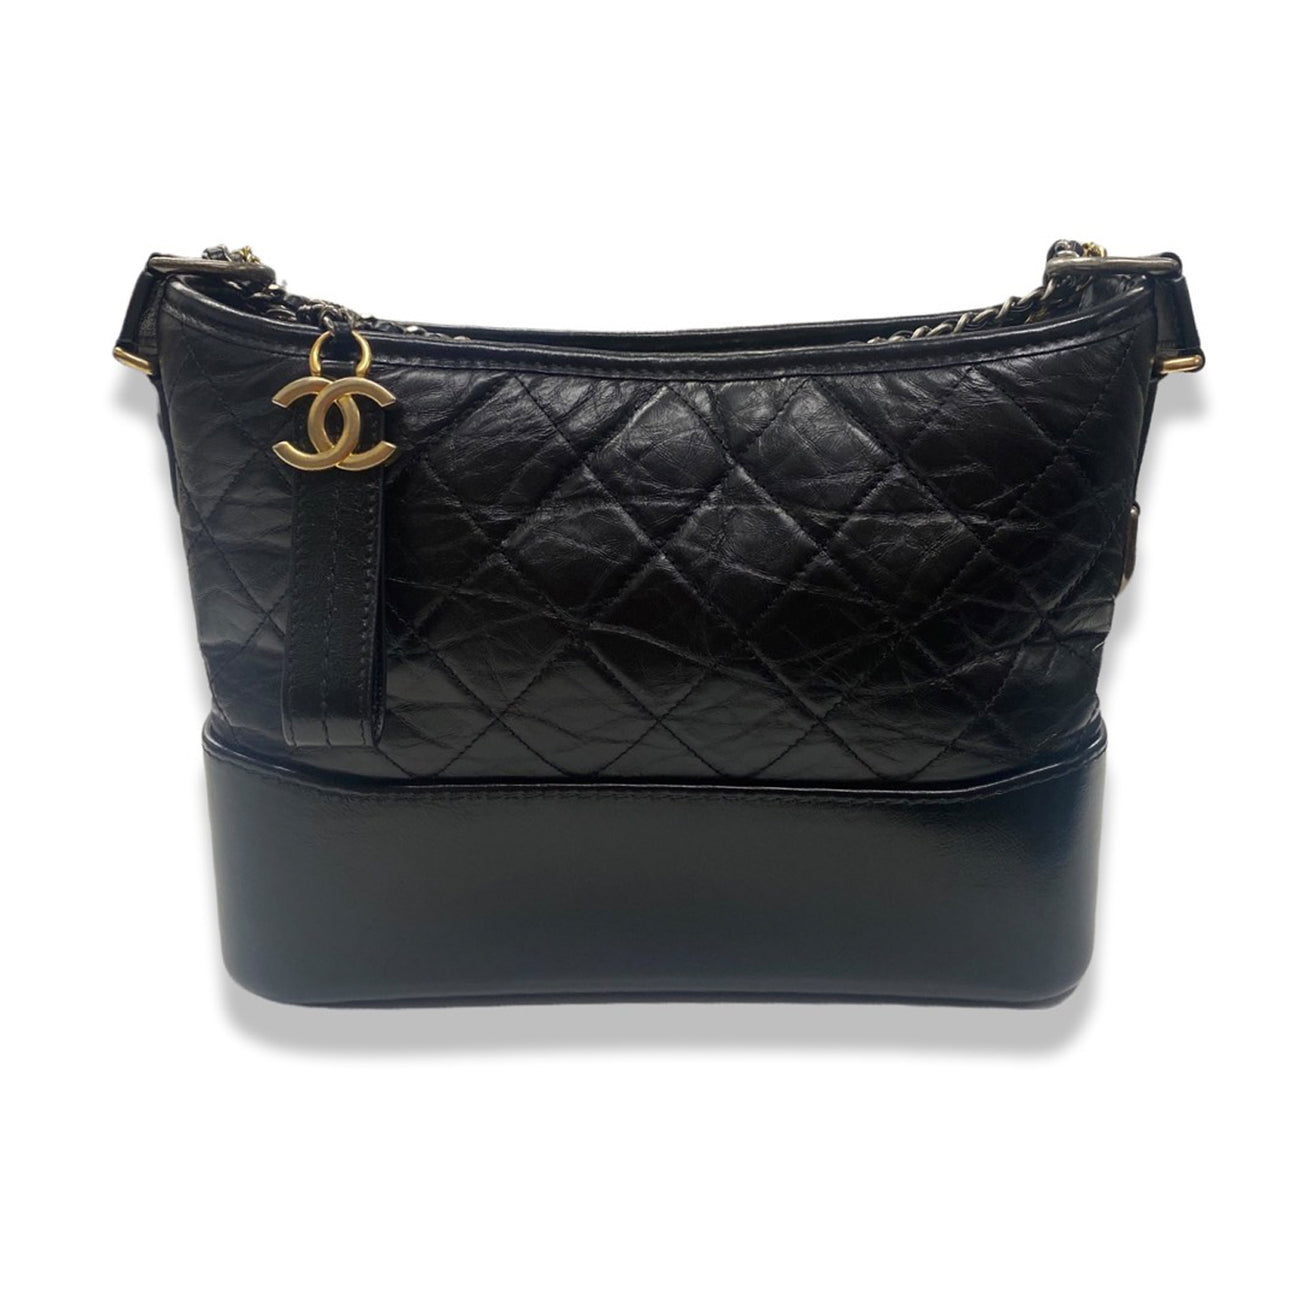 Black Chanel Bag - Gabrielle Hobo Bag